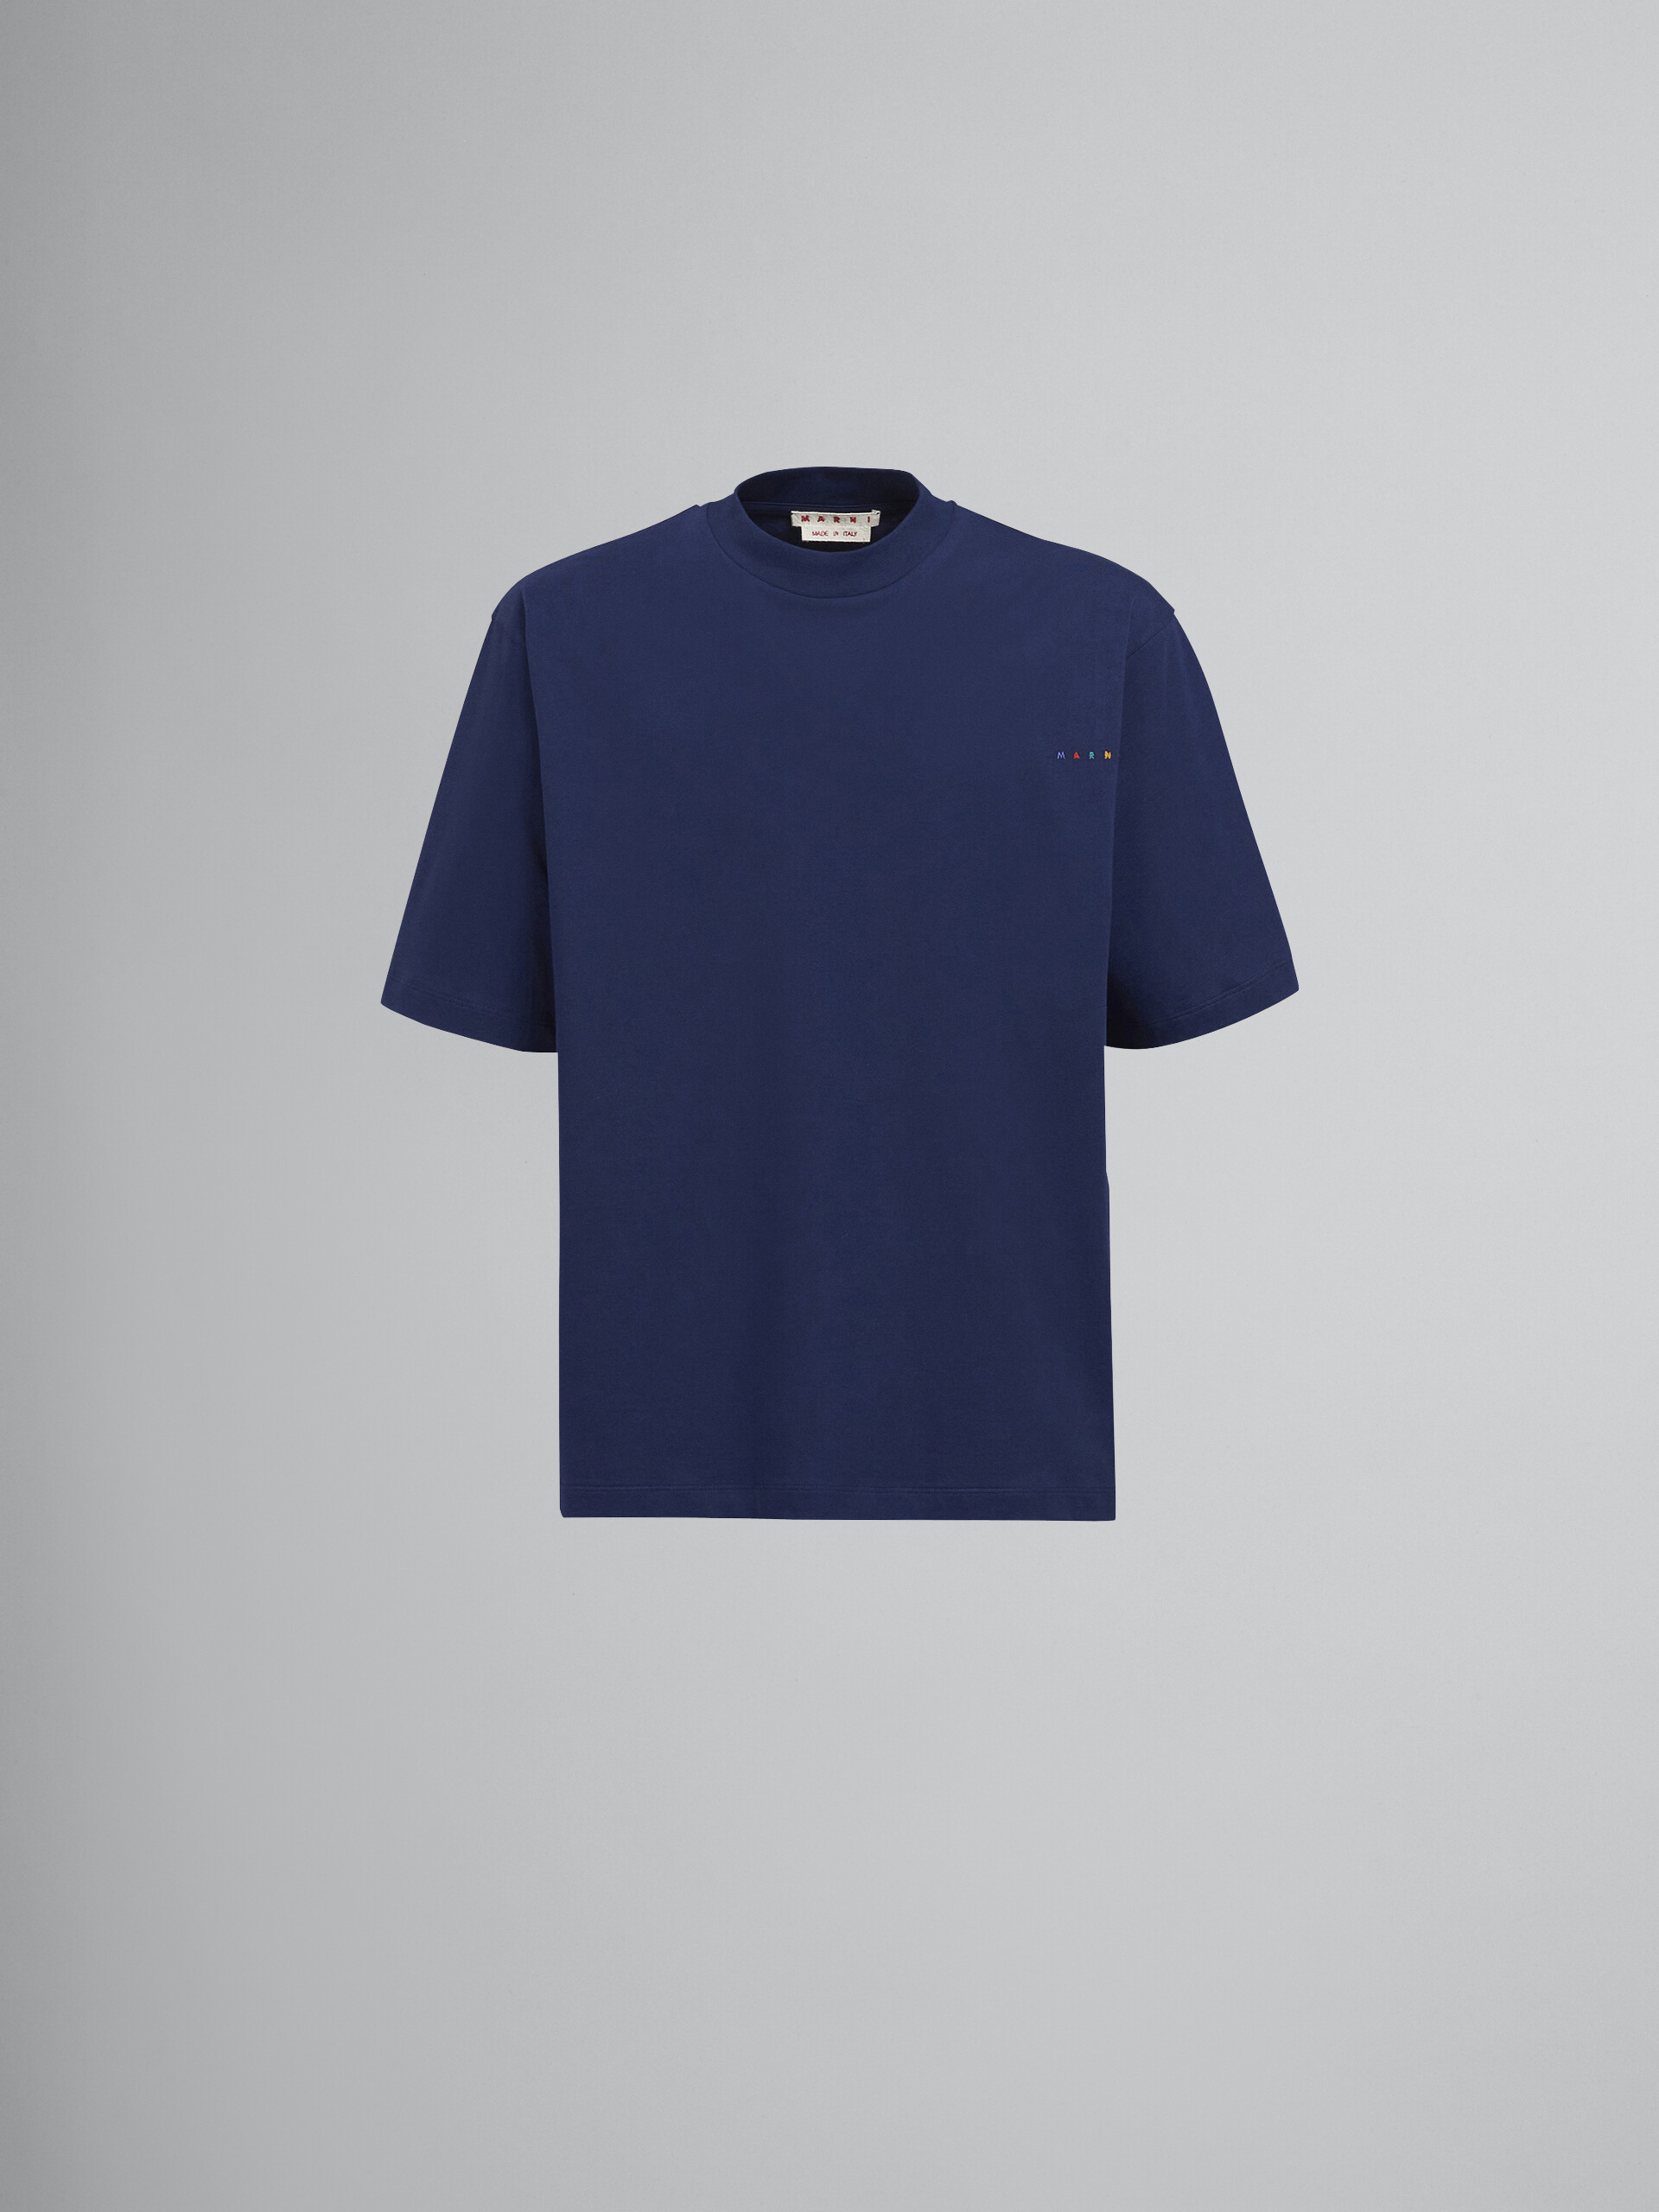 Still Nature print blue jersey T-shirt - T-shirts - Image 1